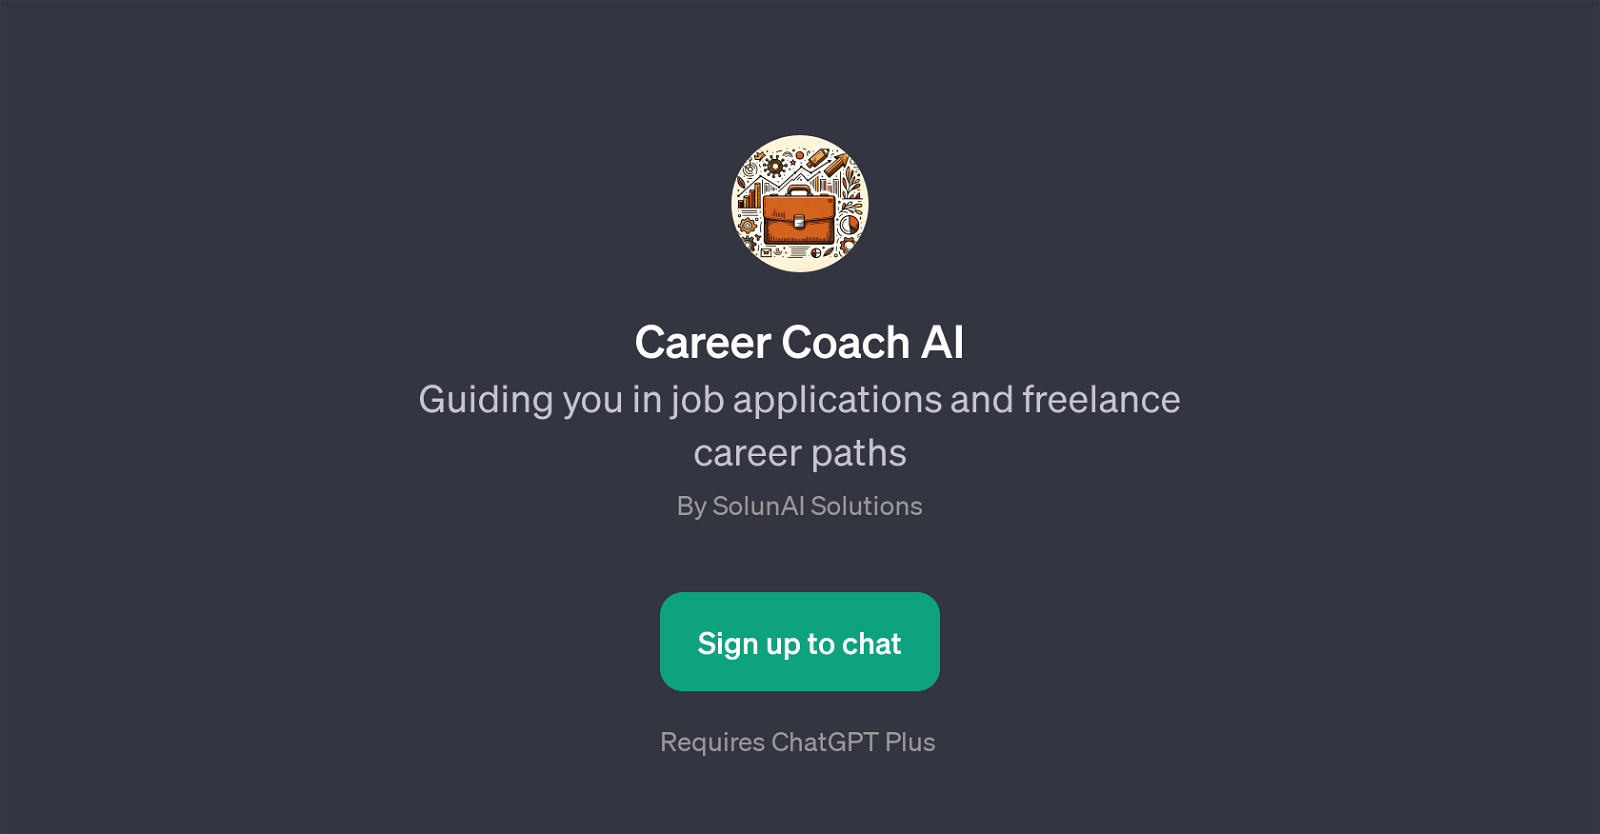 Career Coach AI website